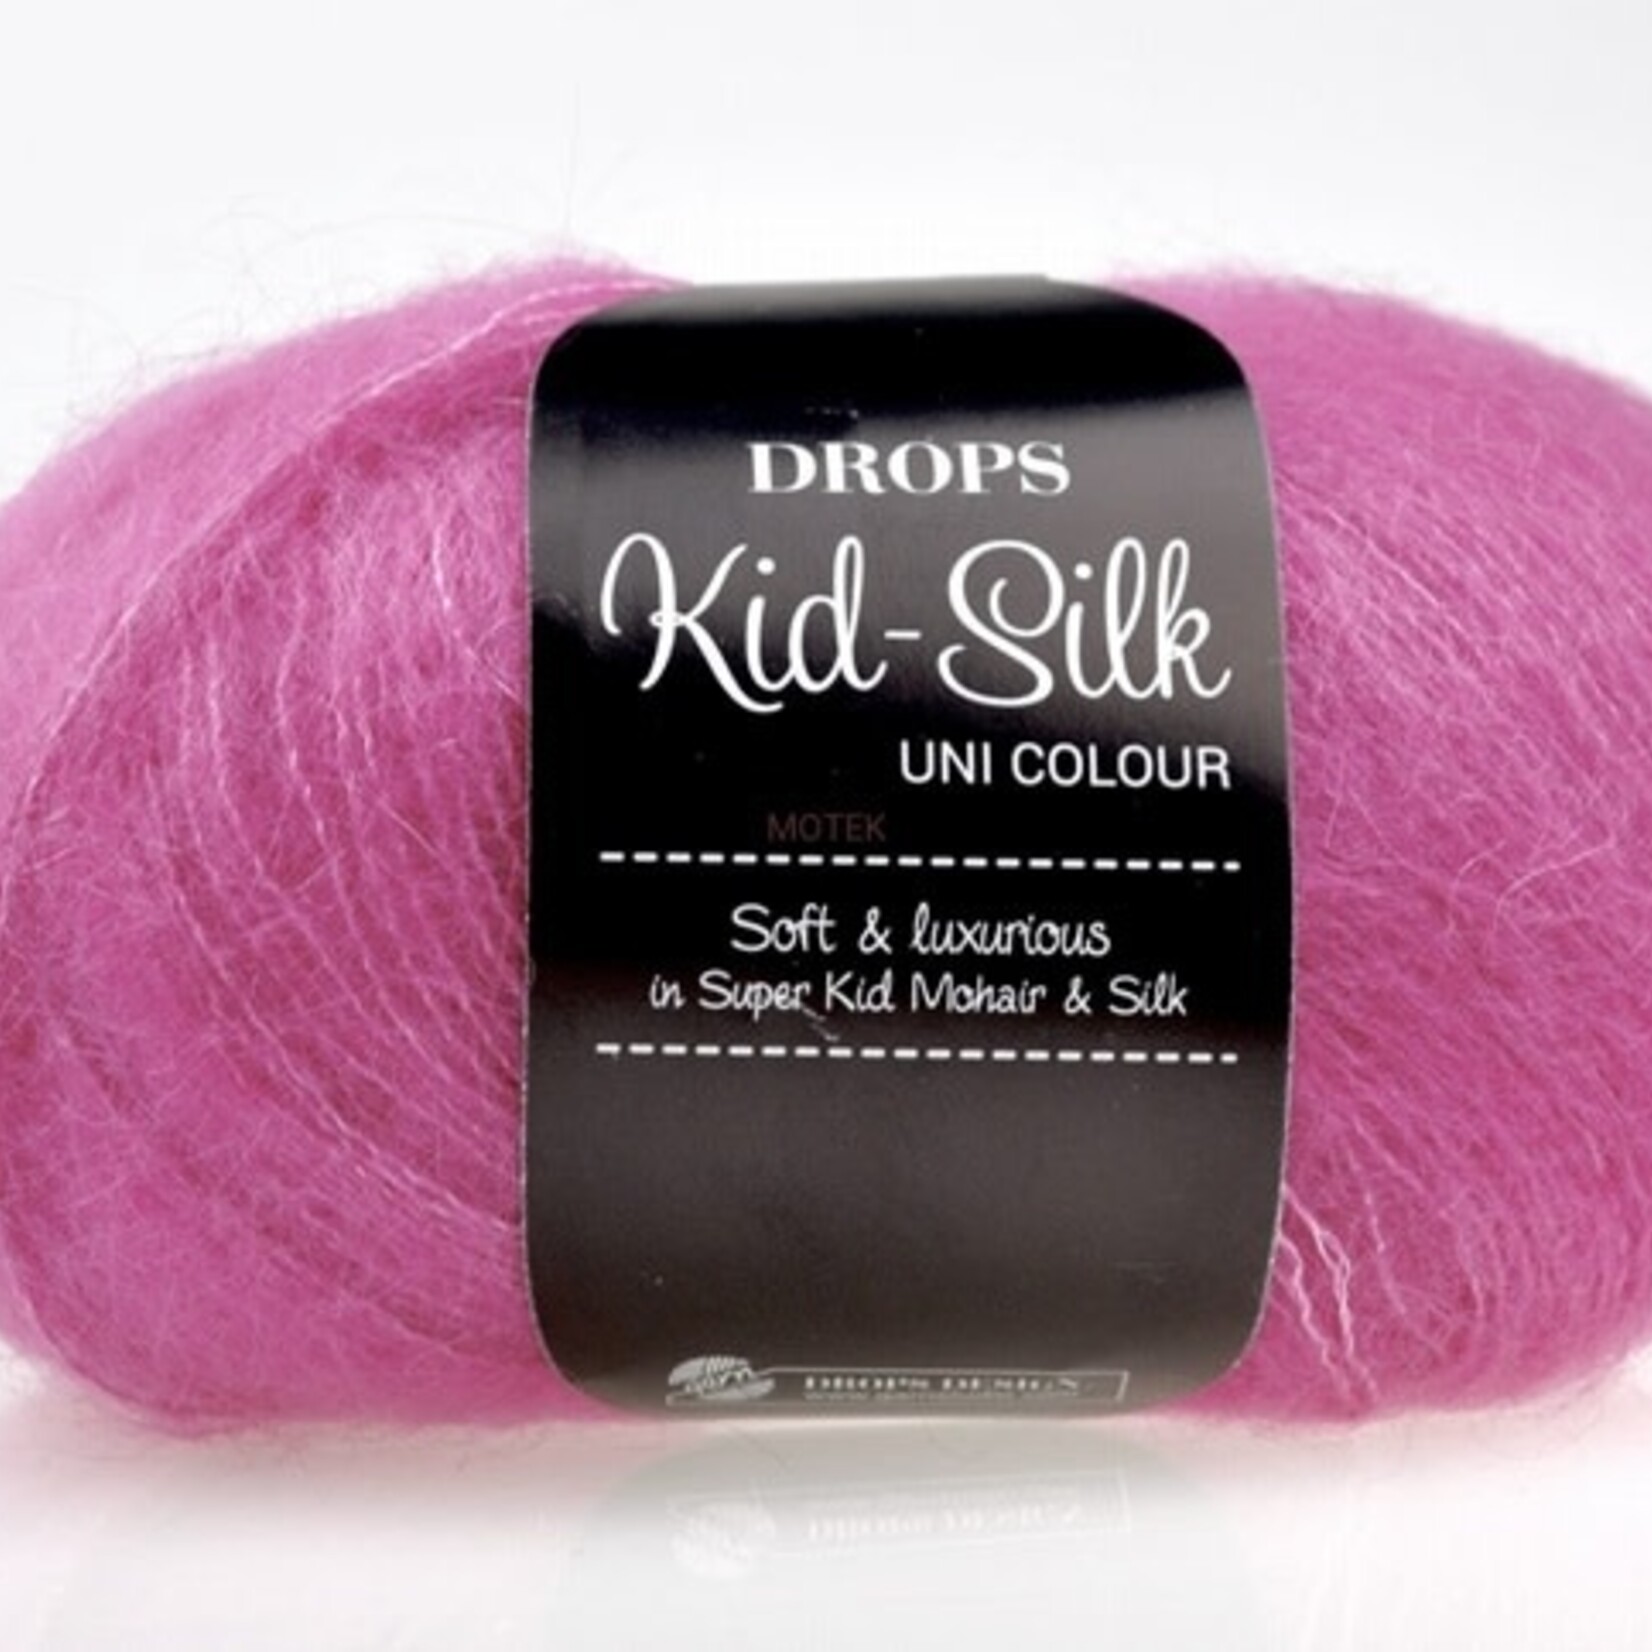 Drops Kid Silk Uni Colour by Drops